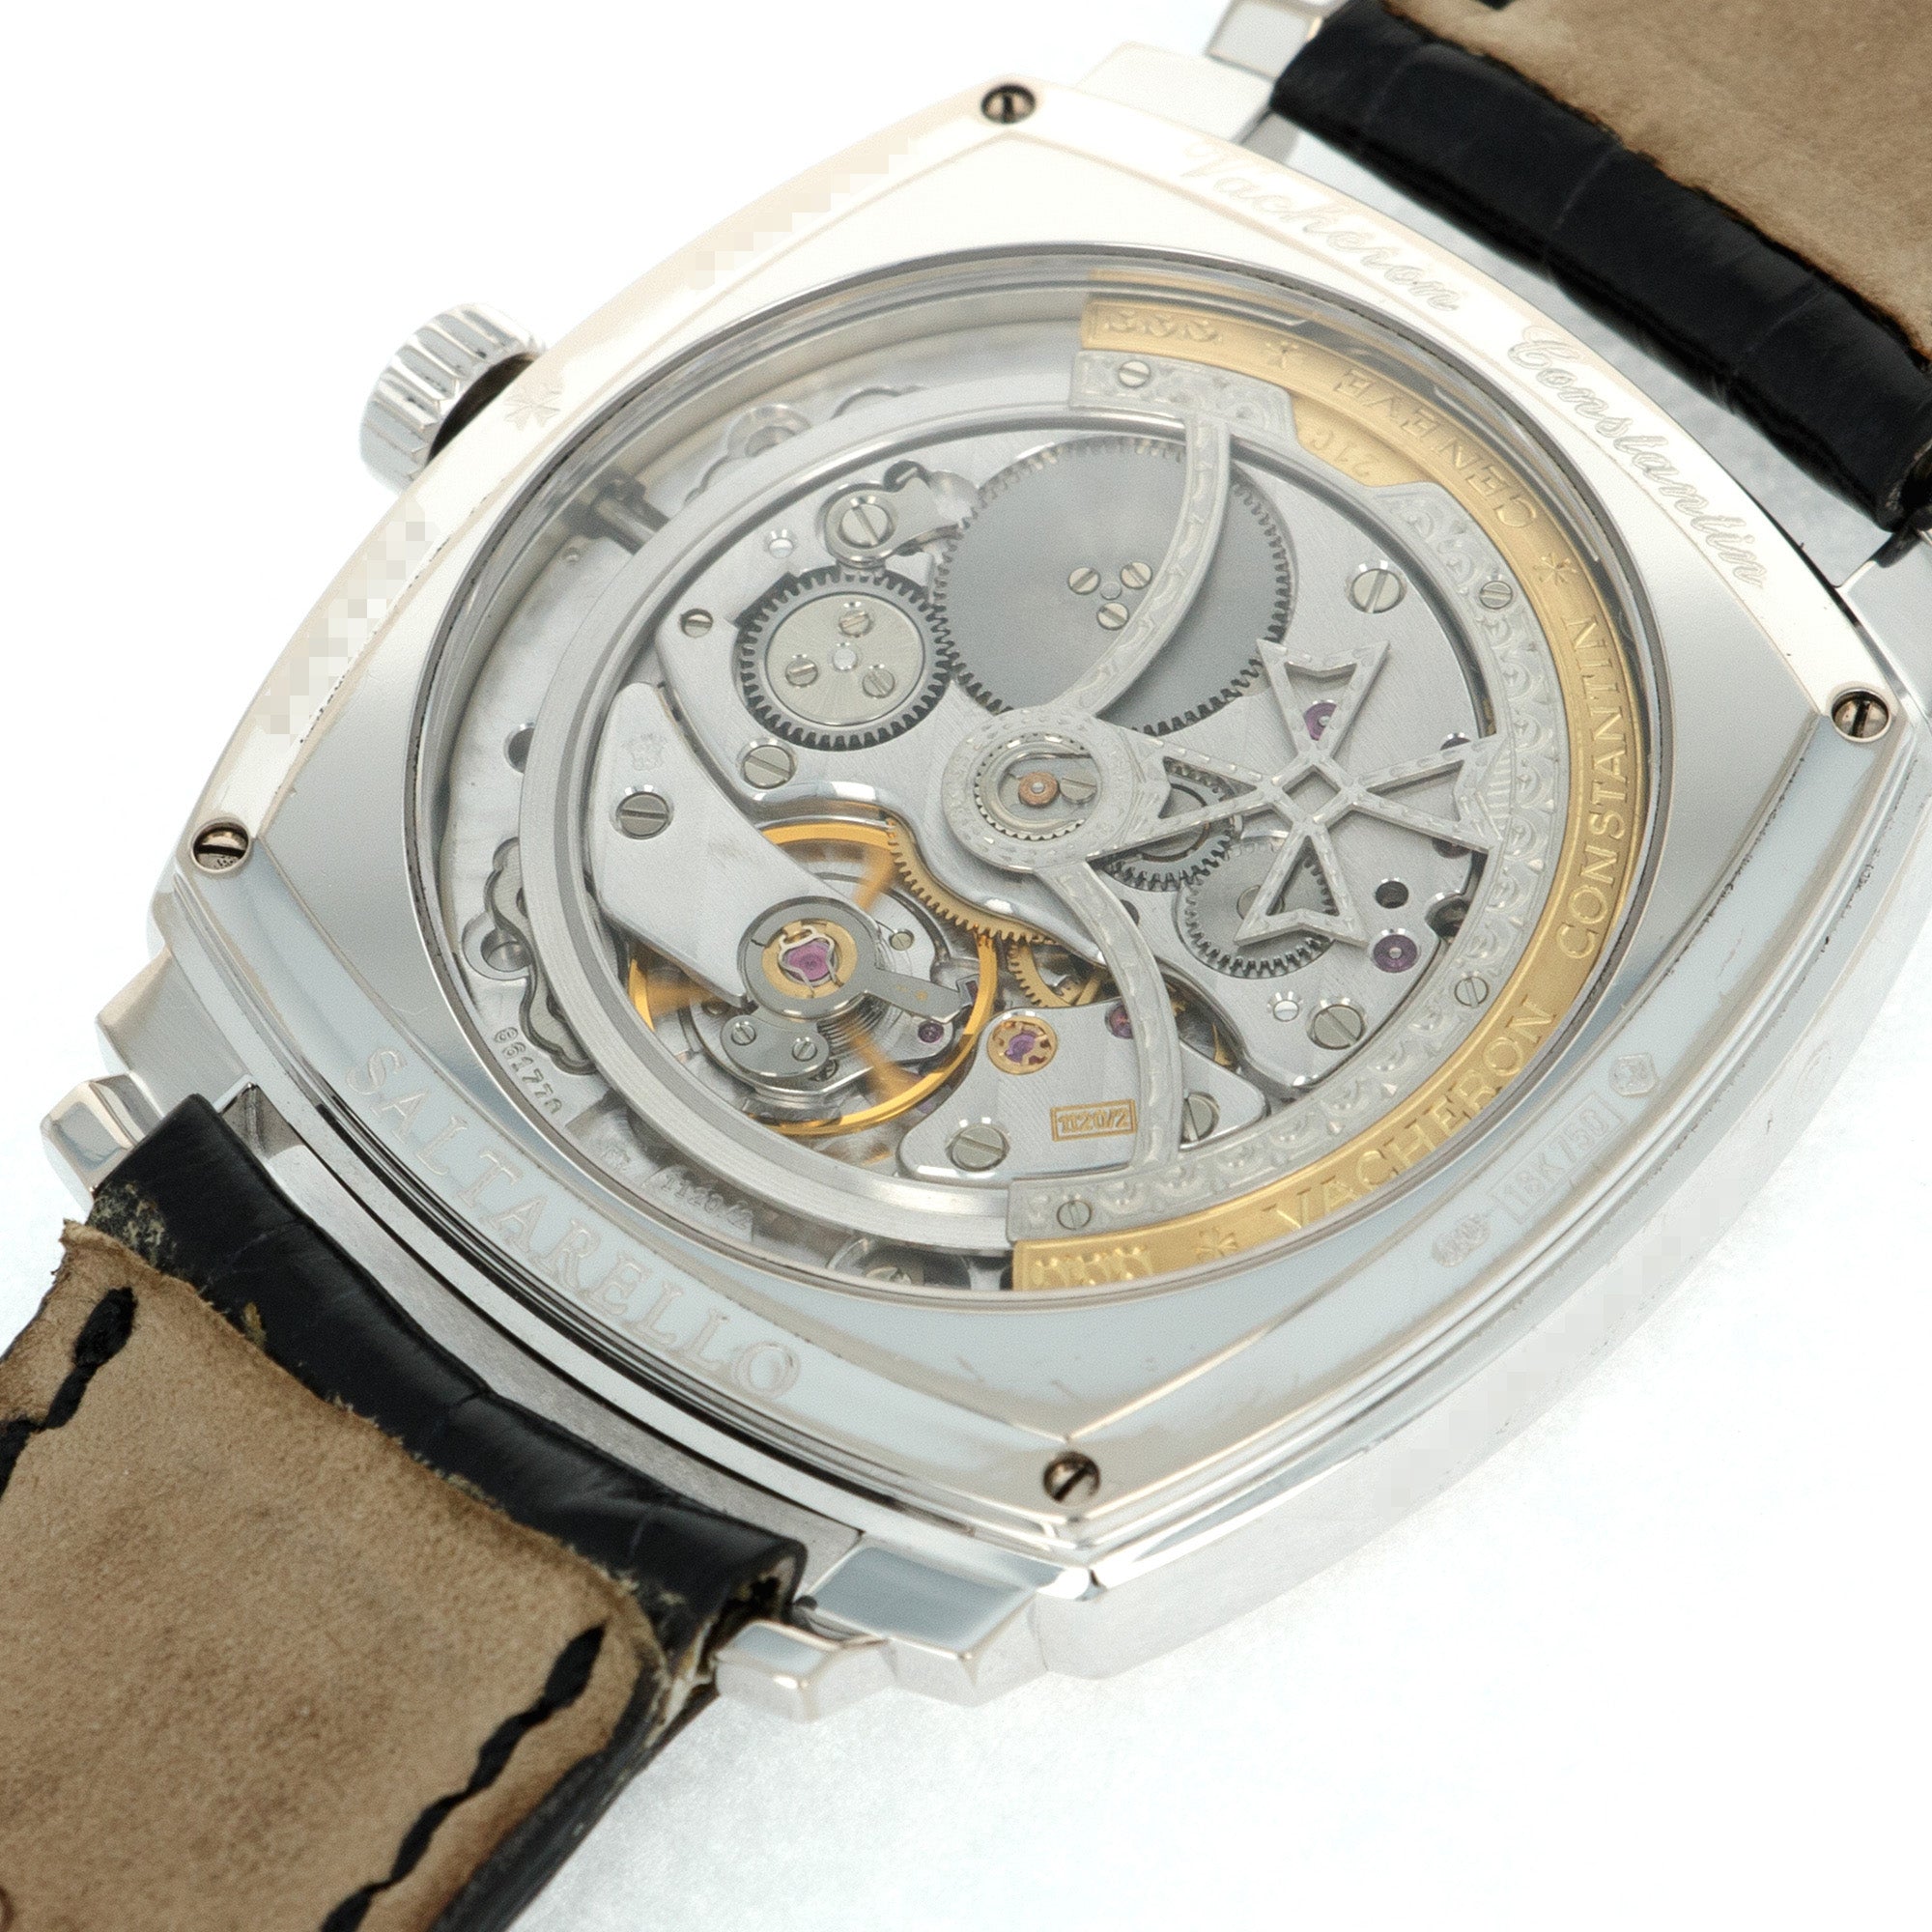 Vacheron Constantin - Vacheron Constantin White Gold Saltarello Ref. 163550 - The Keystone Watches